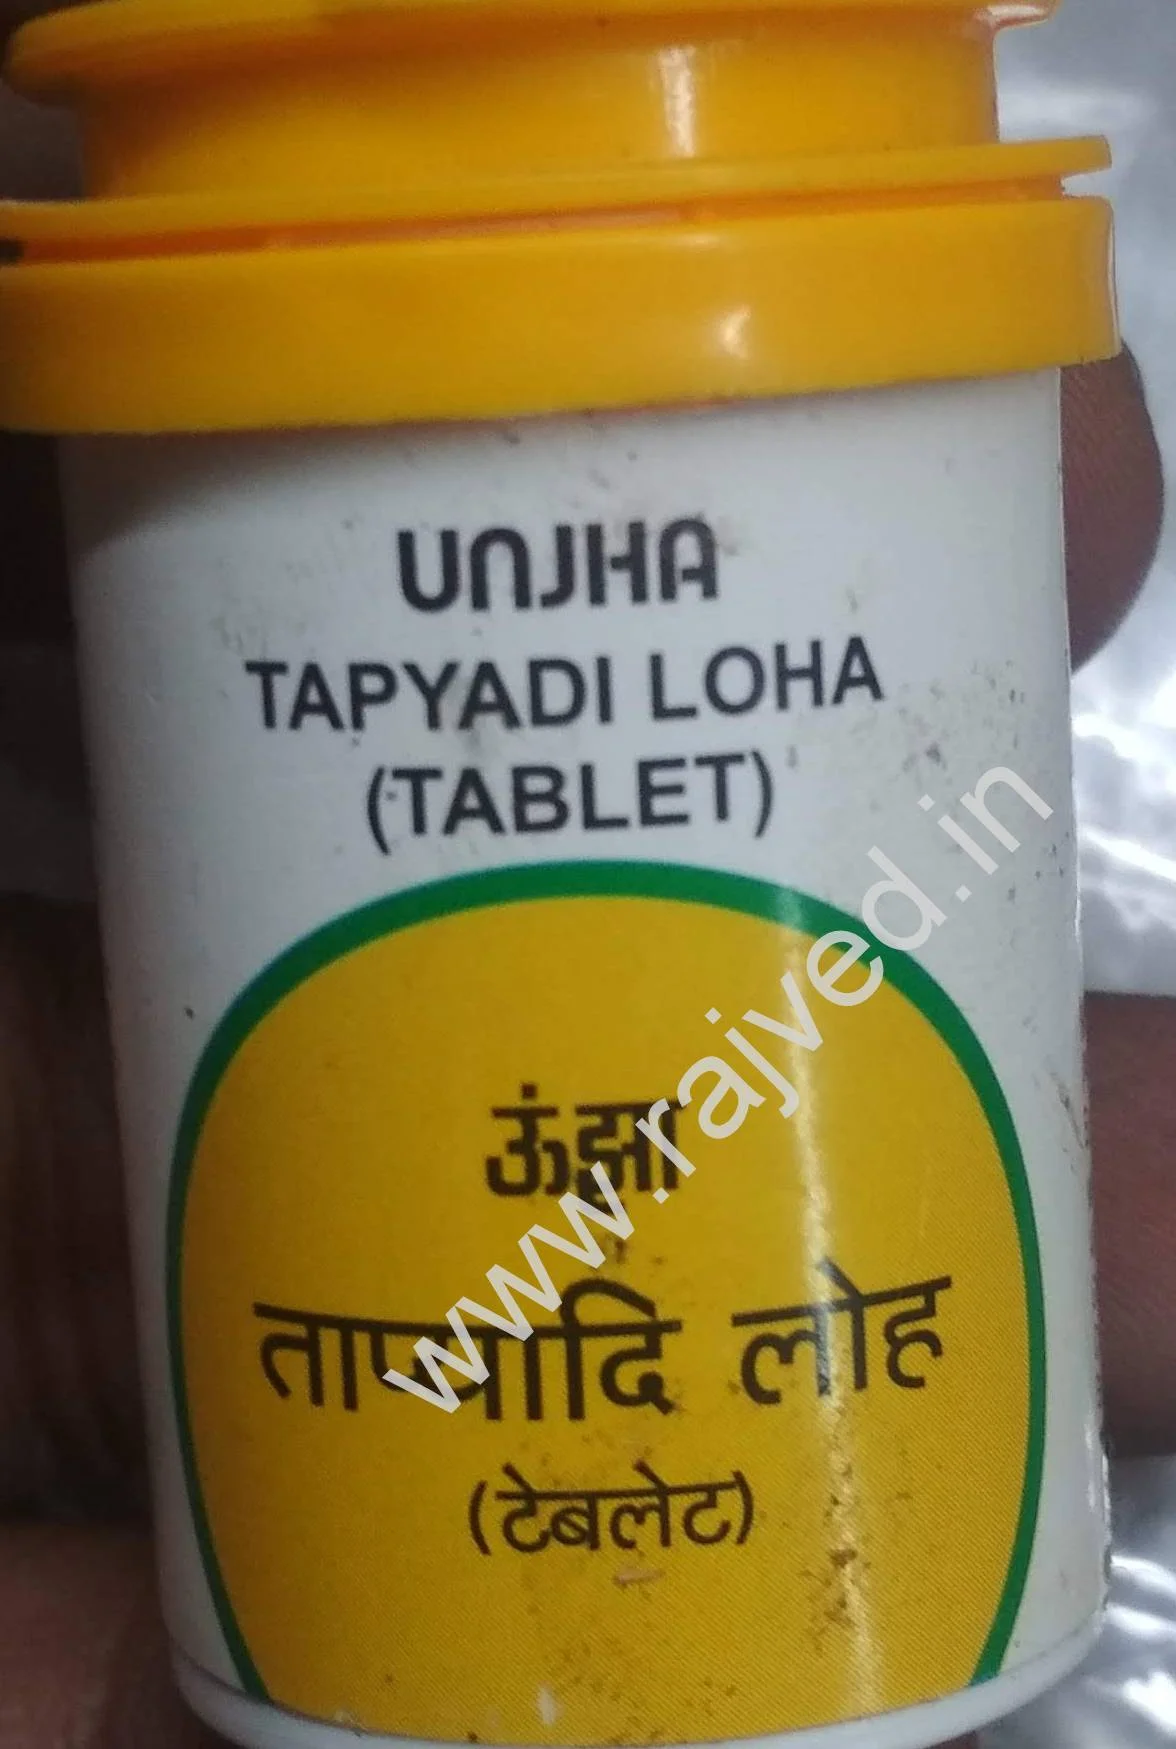 tapyadi loha 30 tablet the unjha pharmacy